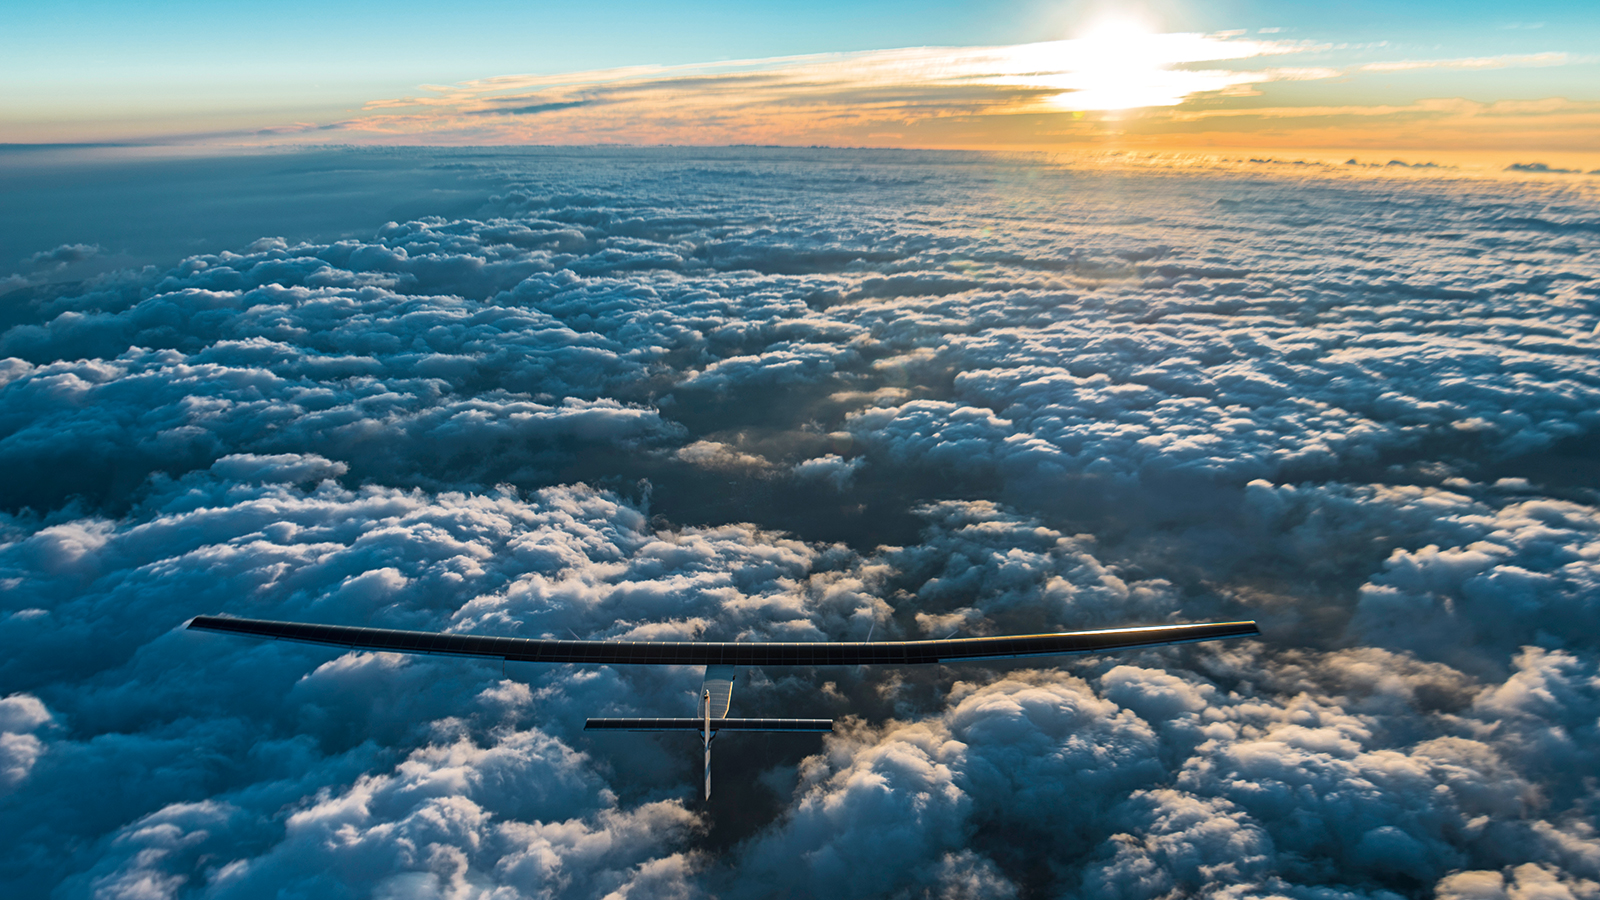 Solar Impulse © Anna Pizzolante